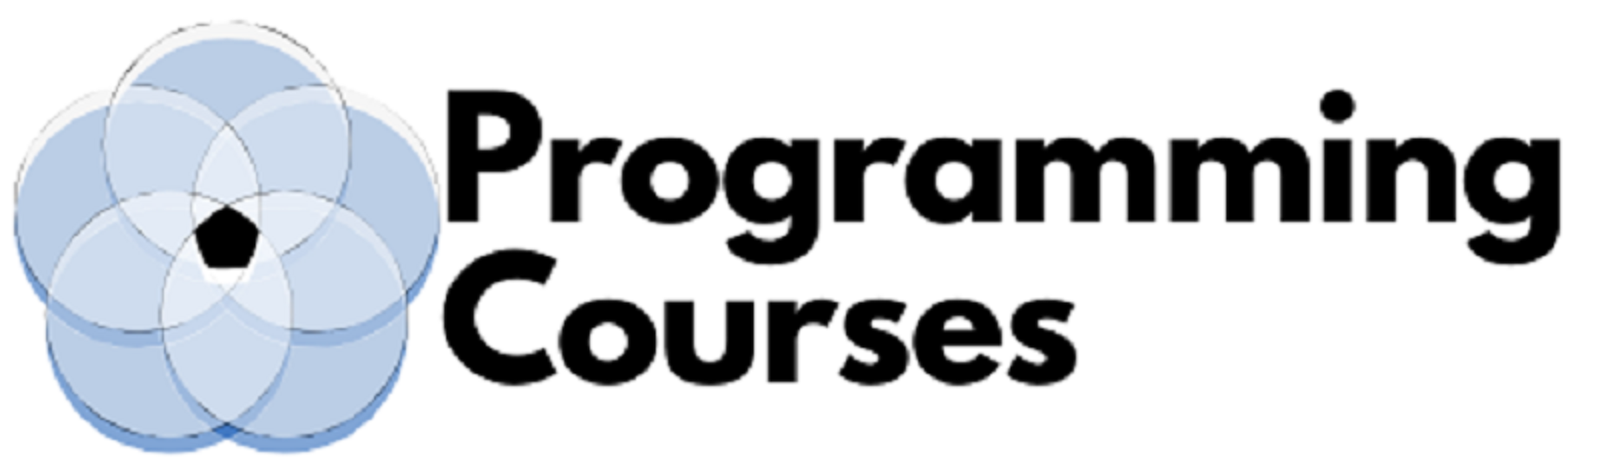 Free Programming Courses